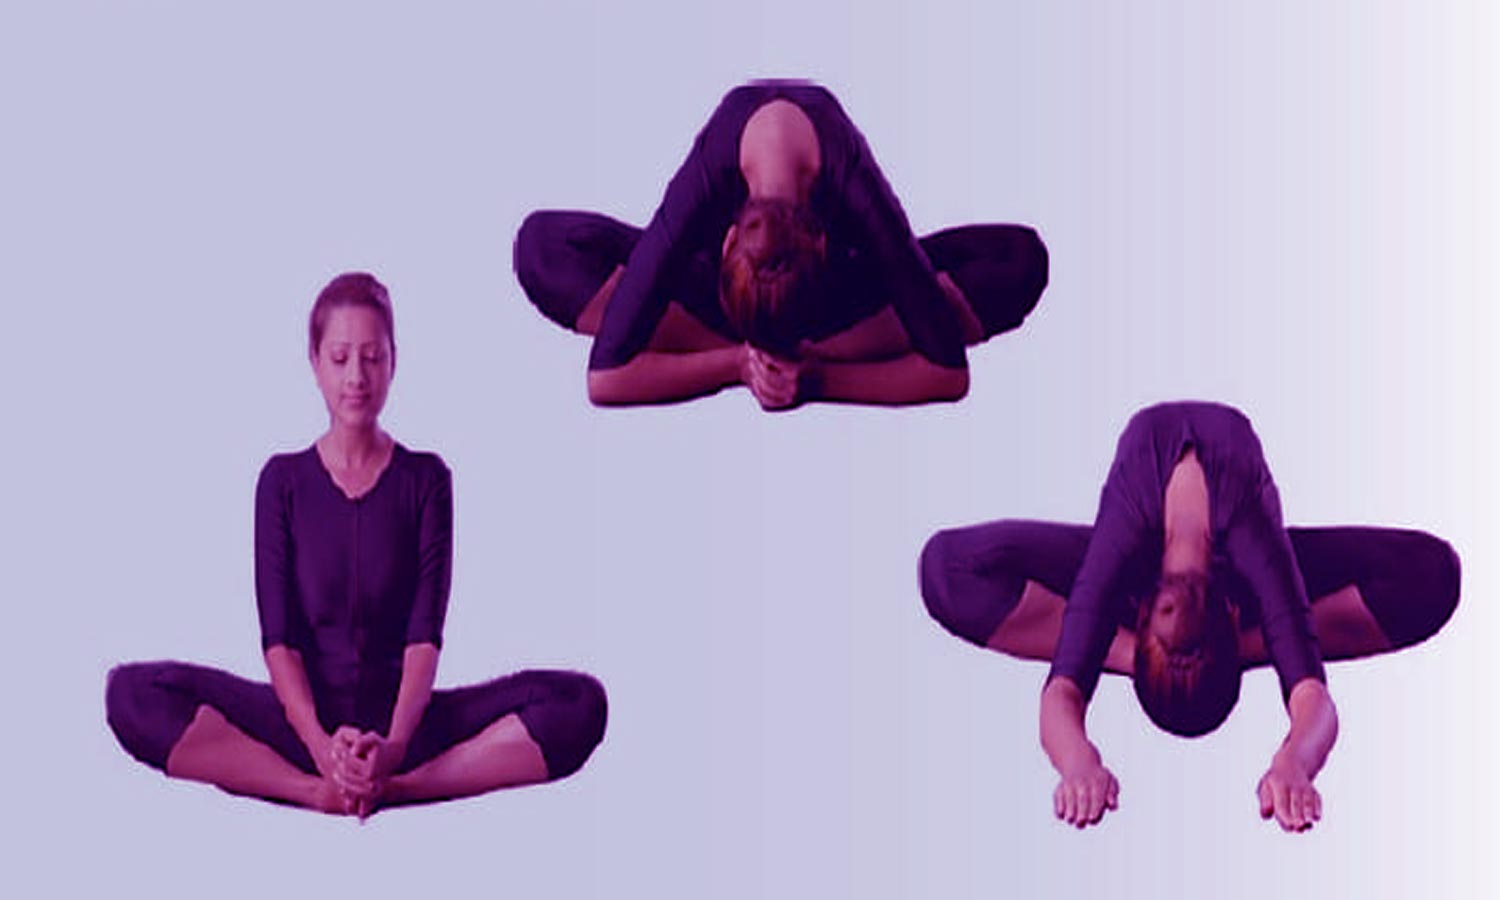 How to do Bhadrasana? - The Yoga Institute